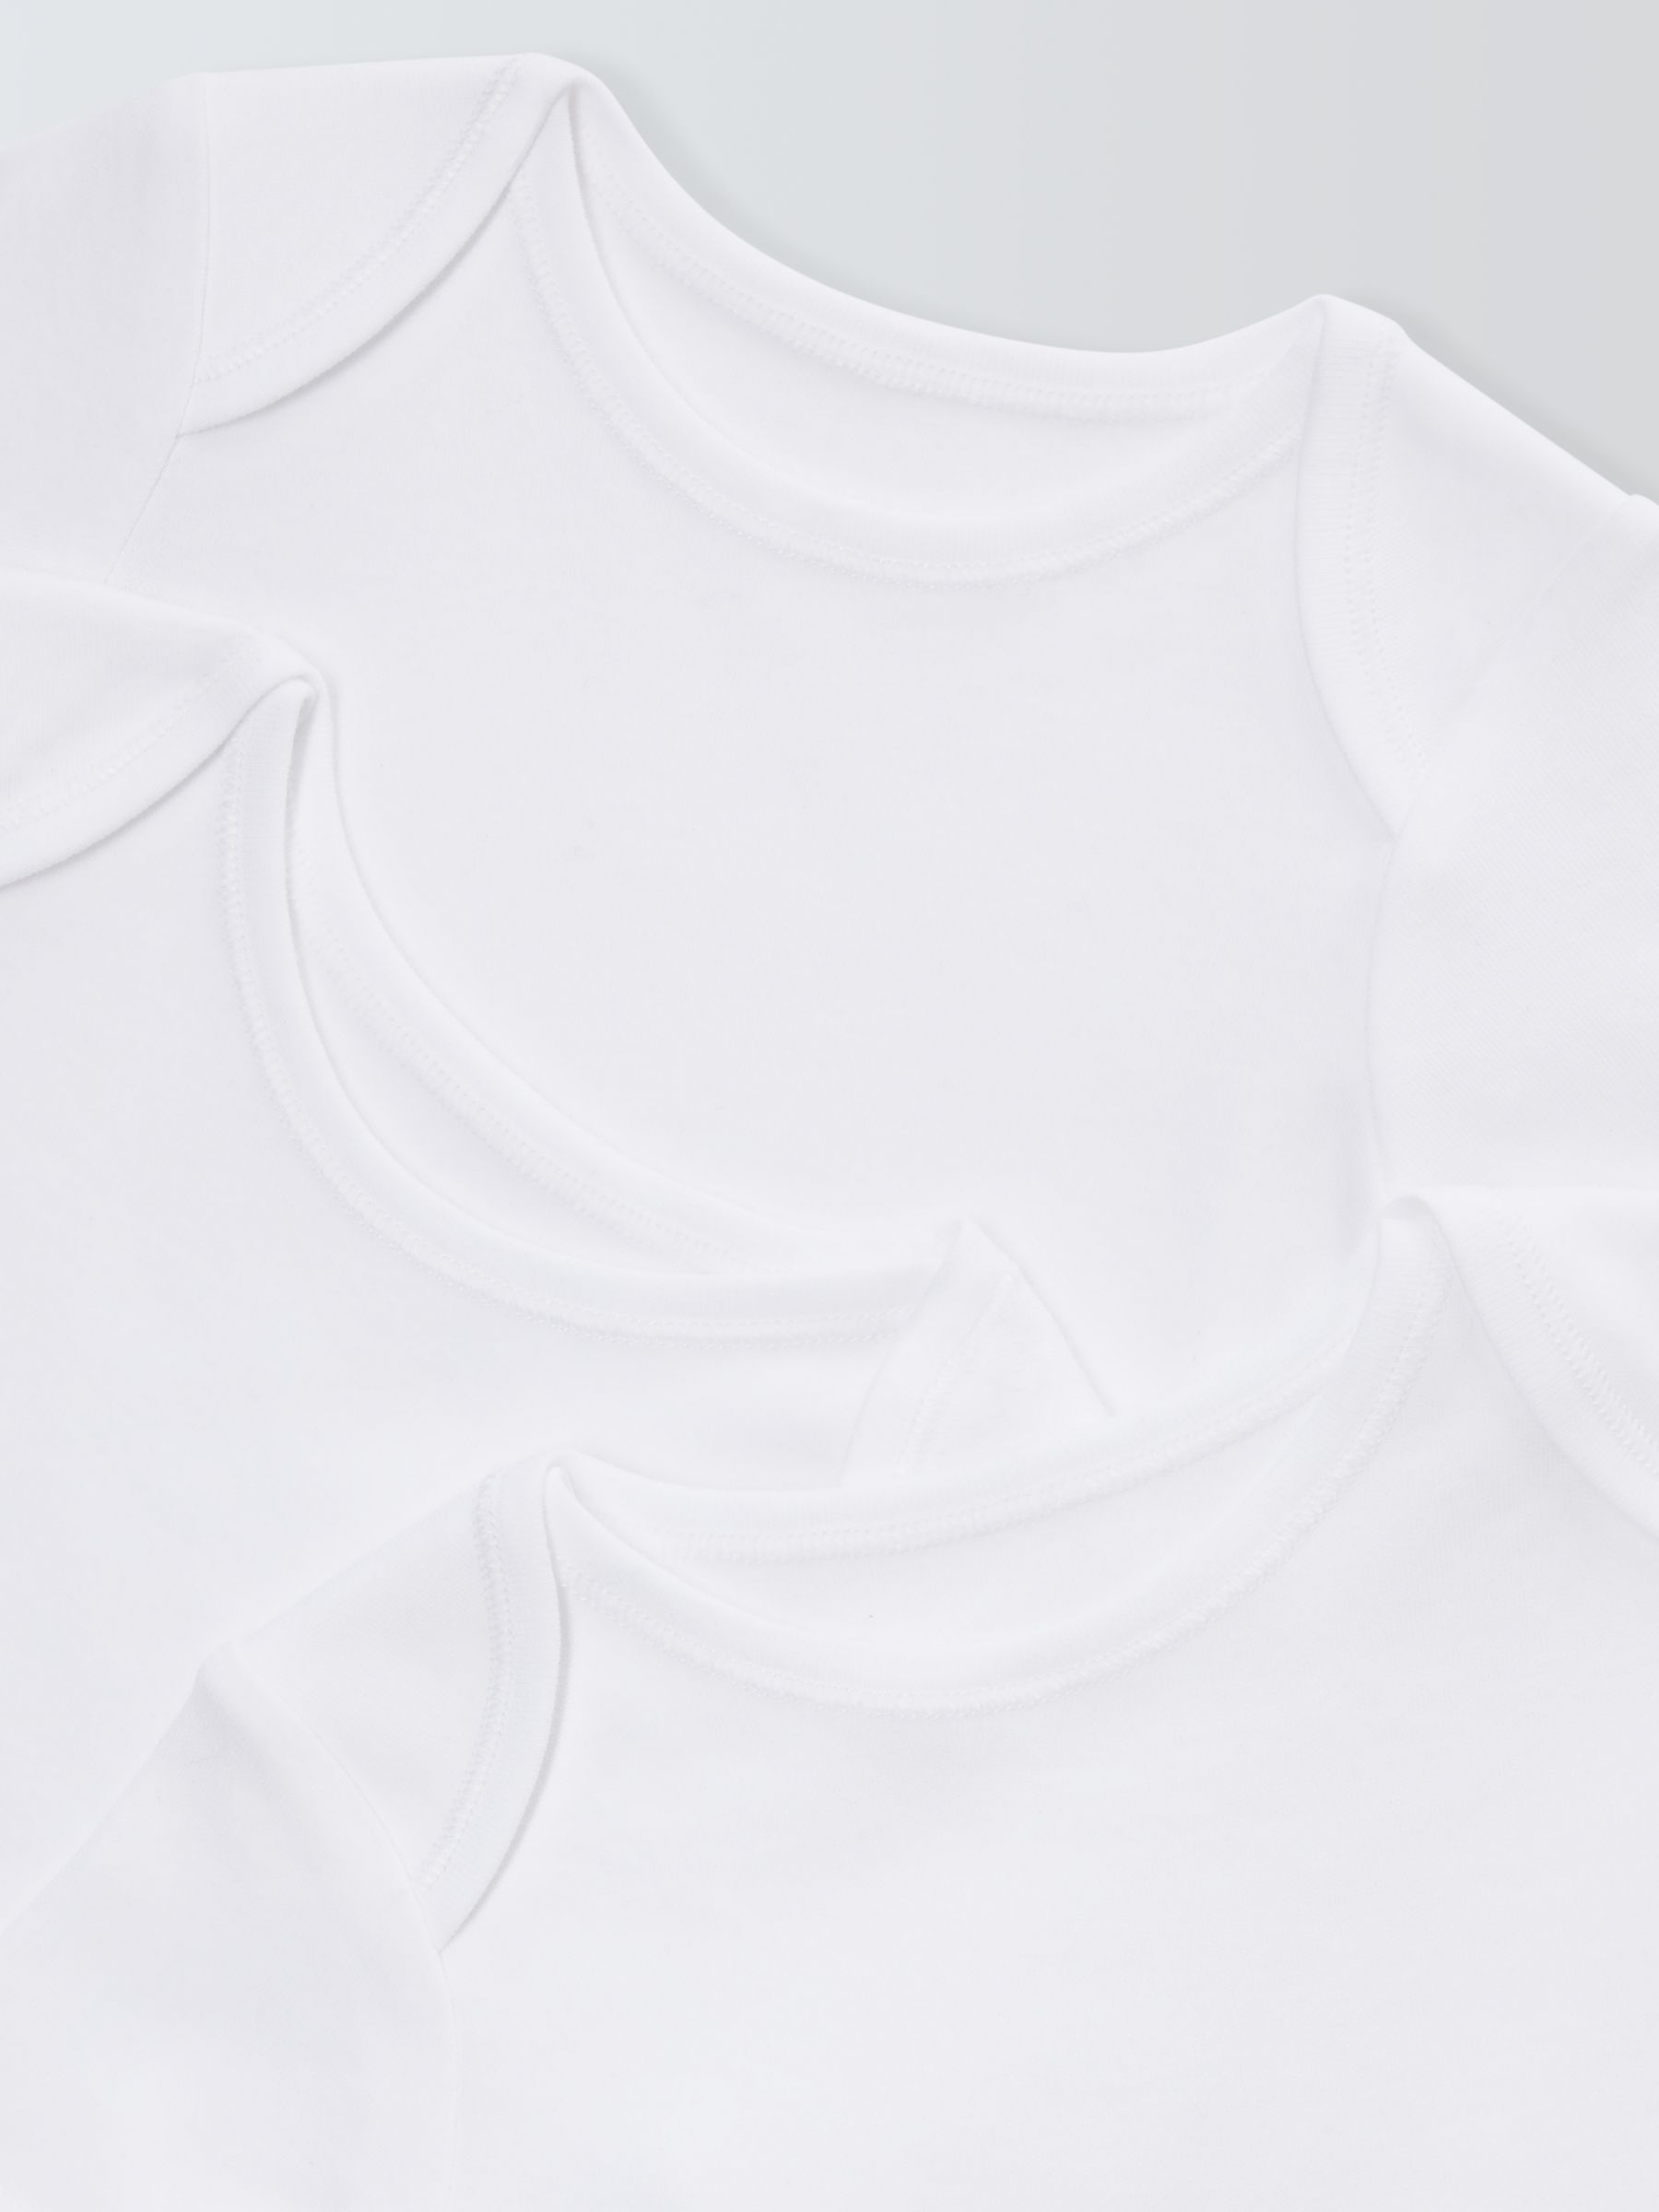 Buy John Lewis Baby GOTS Organic Cotton Short Sleeve Bodysuits, Pack of 5, White Online at johnlewis.com